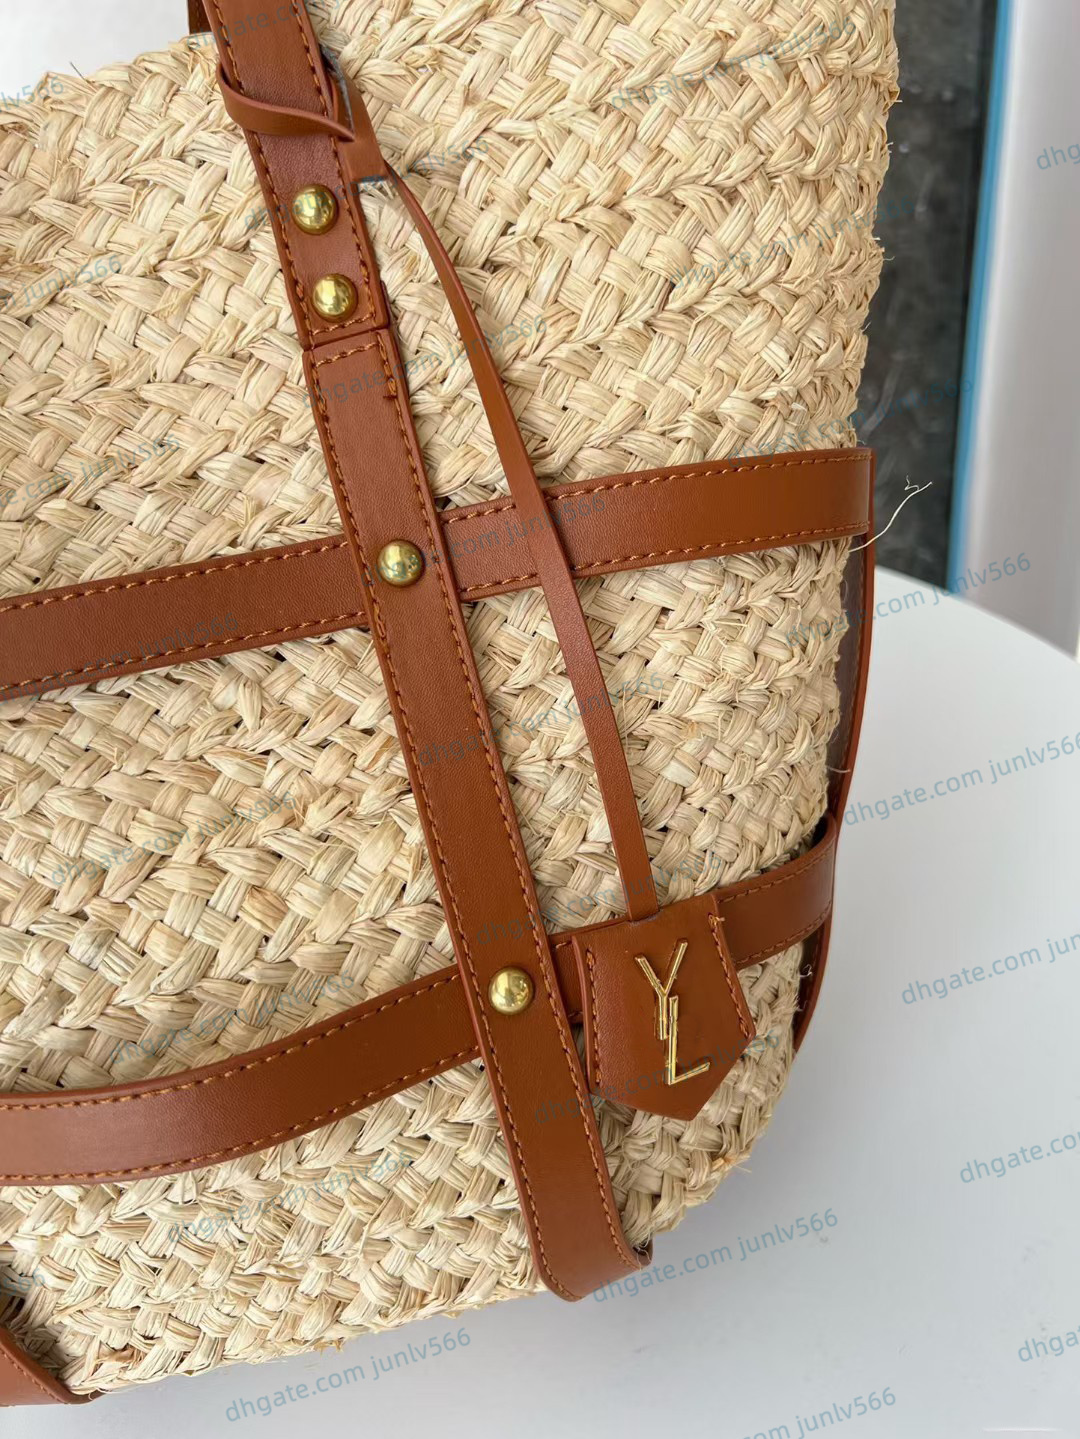 Designers Women shoulder bags Totes Luxurys Original leisure time shopping bag Soft Imitation Grass Hook Woven Handbag Fashion Quality Cross Body bags